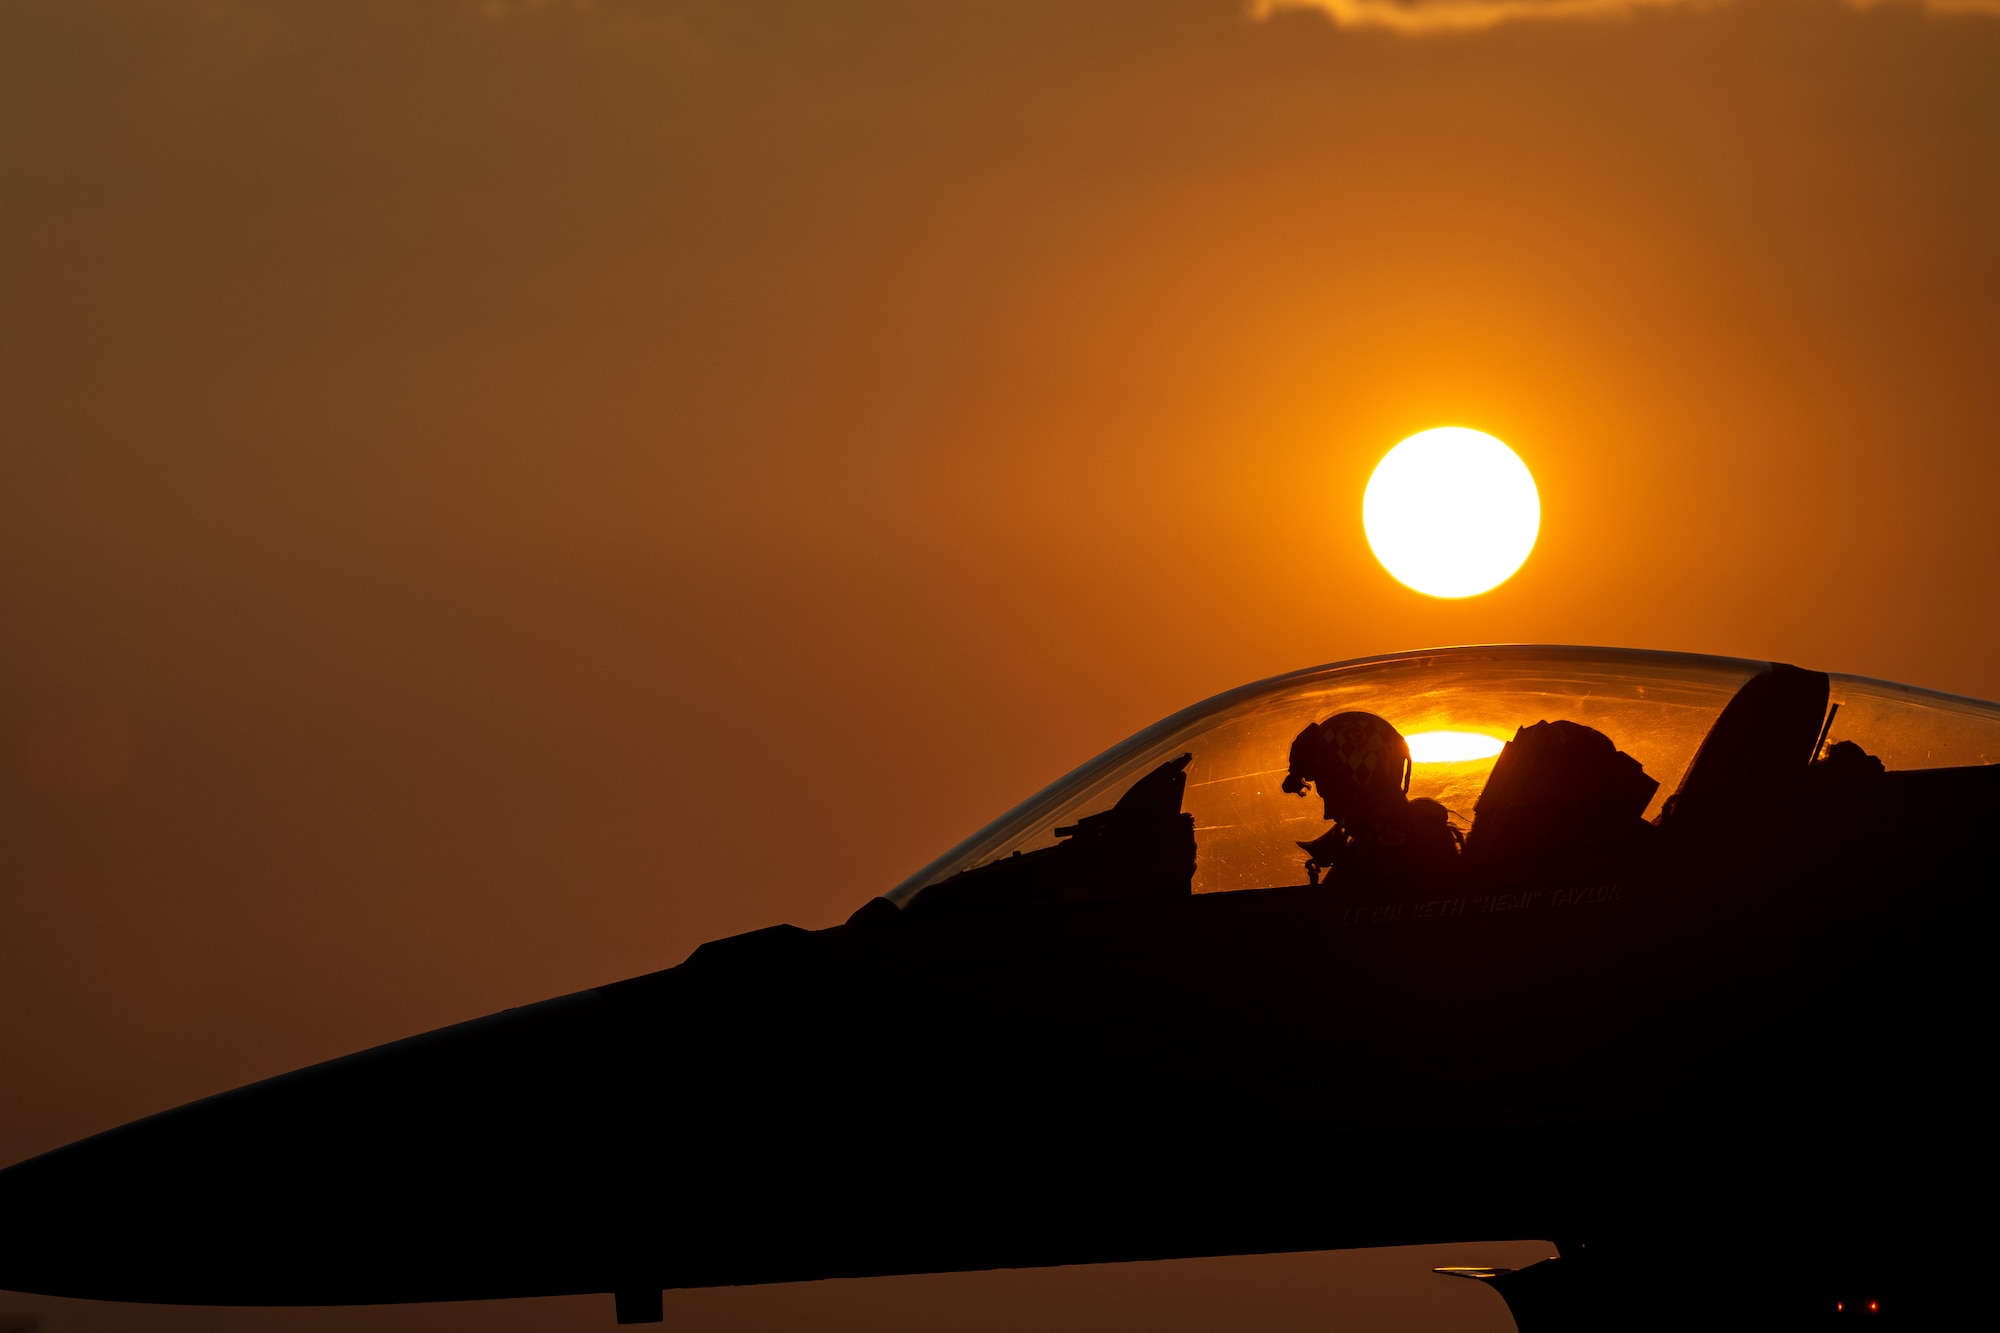 F-16 Fighting Falcon pilot prepares for flight